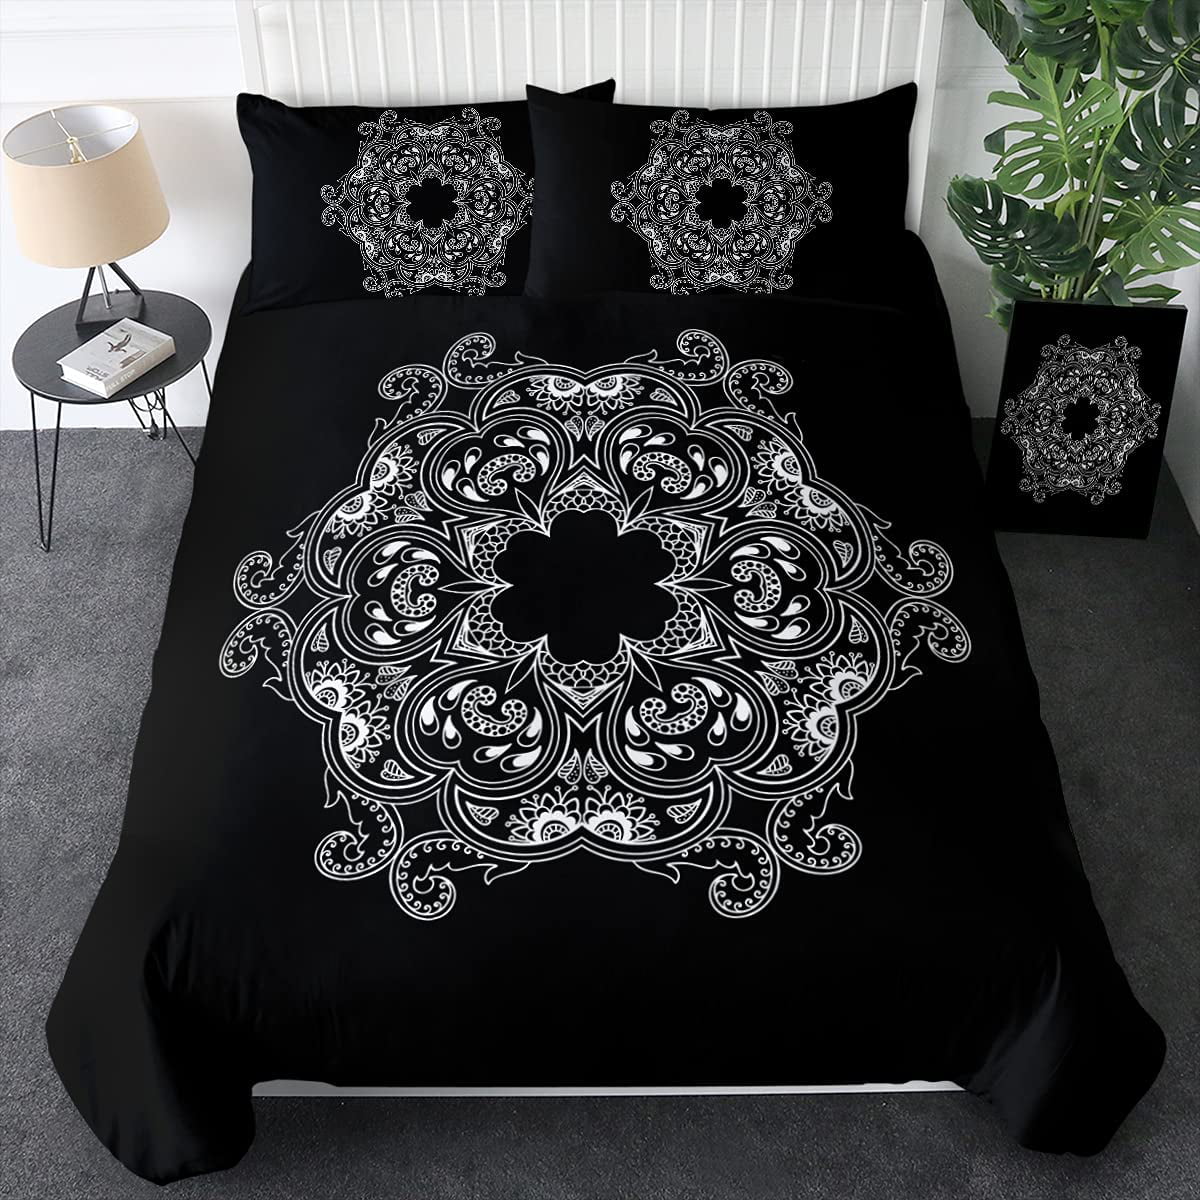 Indian Paisley Duvet Cover Pillow Cases Quilt Cover Bed Linen Bedding Set 